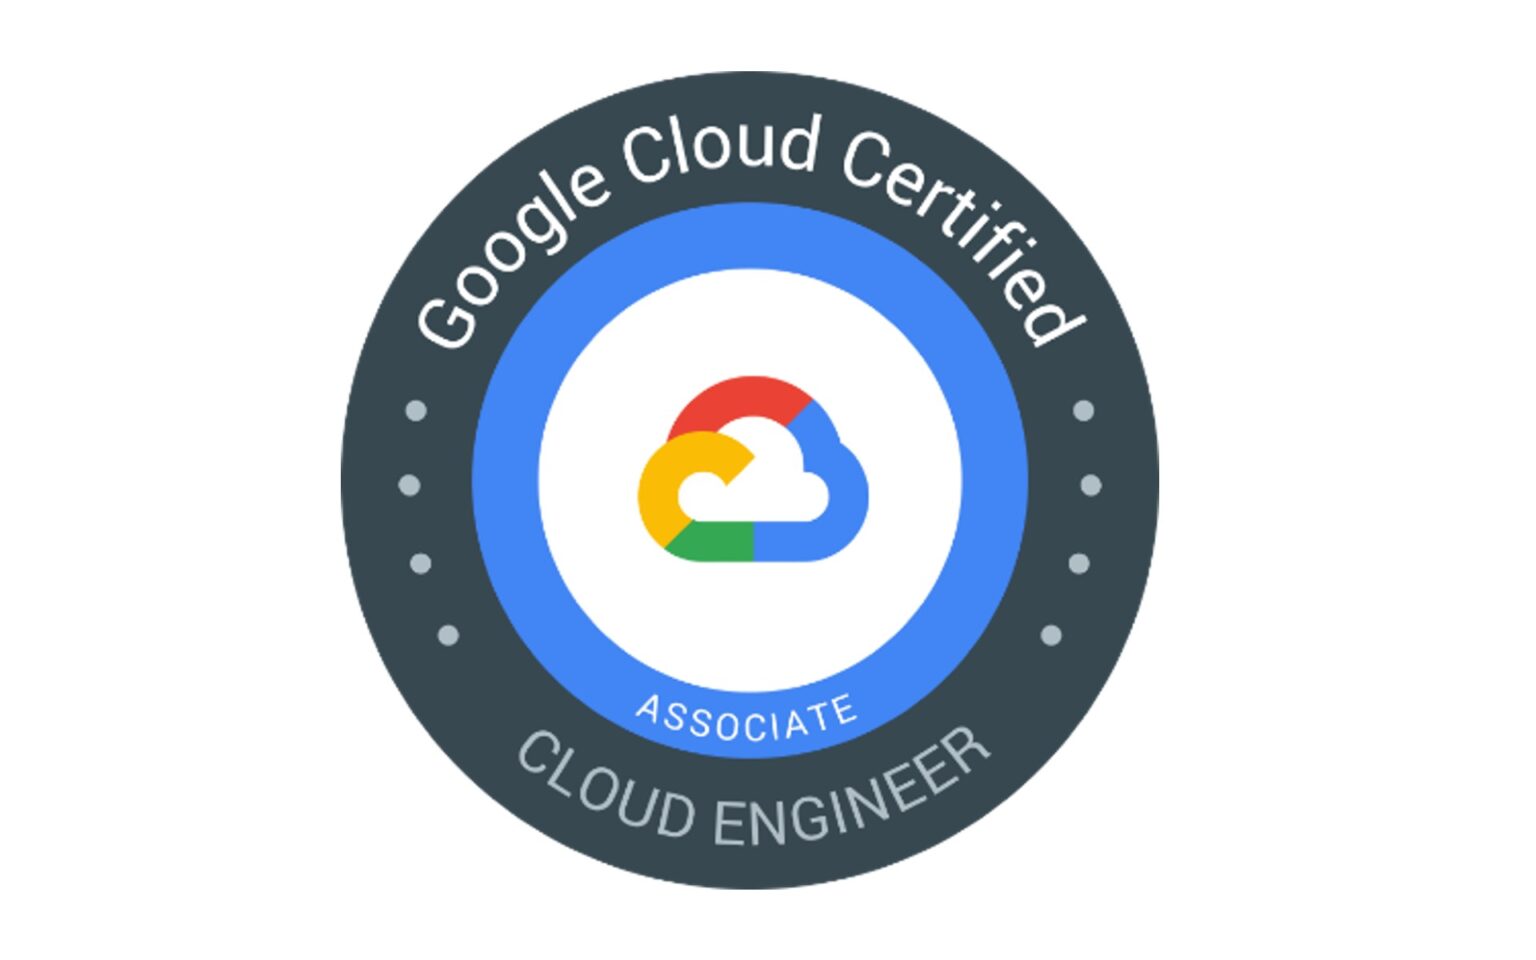 Cloud-Digital-Leader Zertifikatsfragen